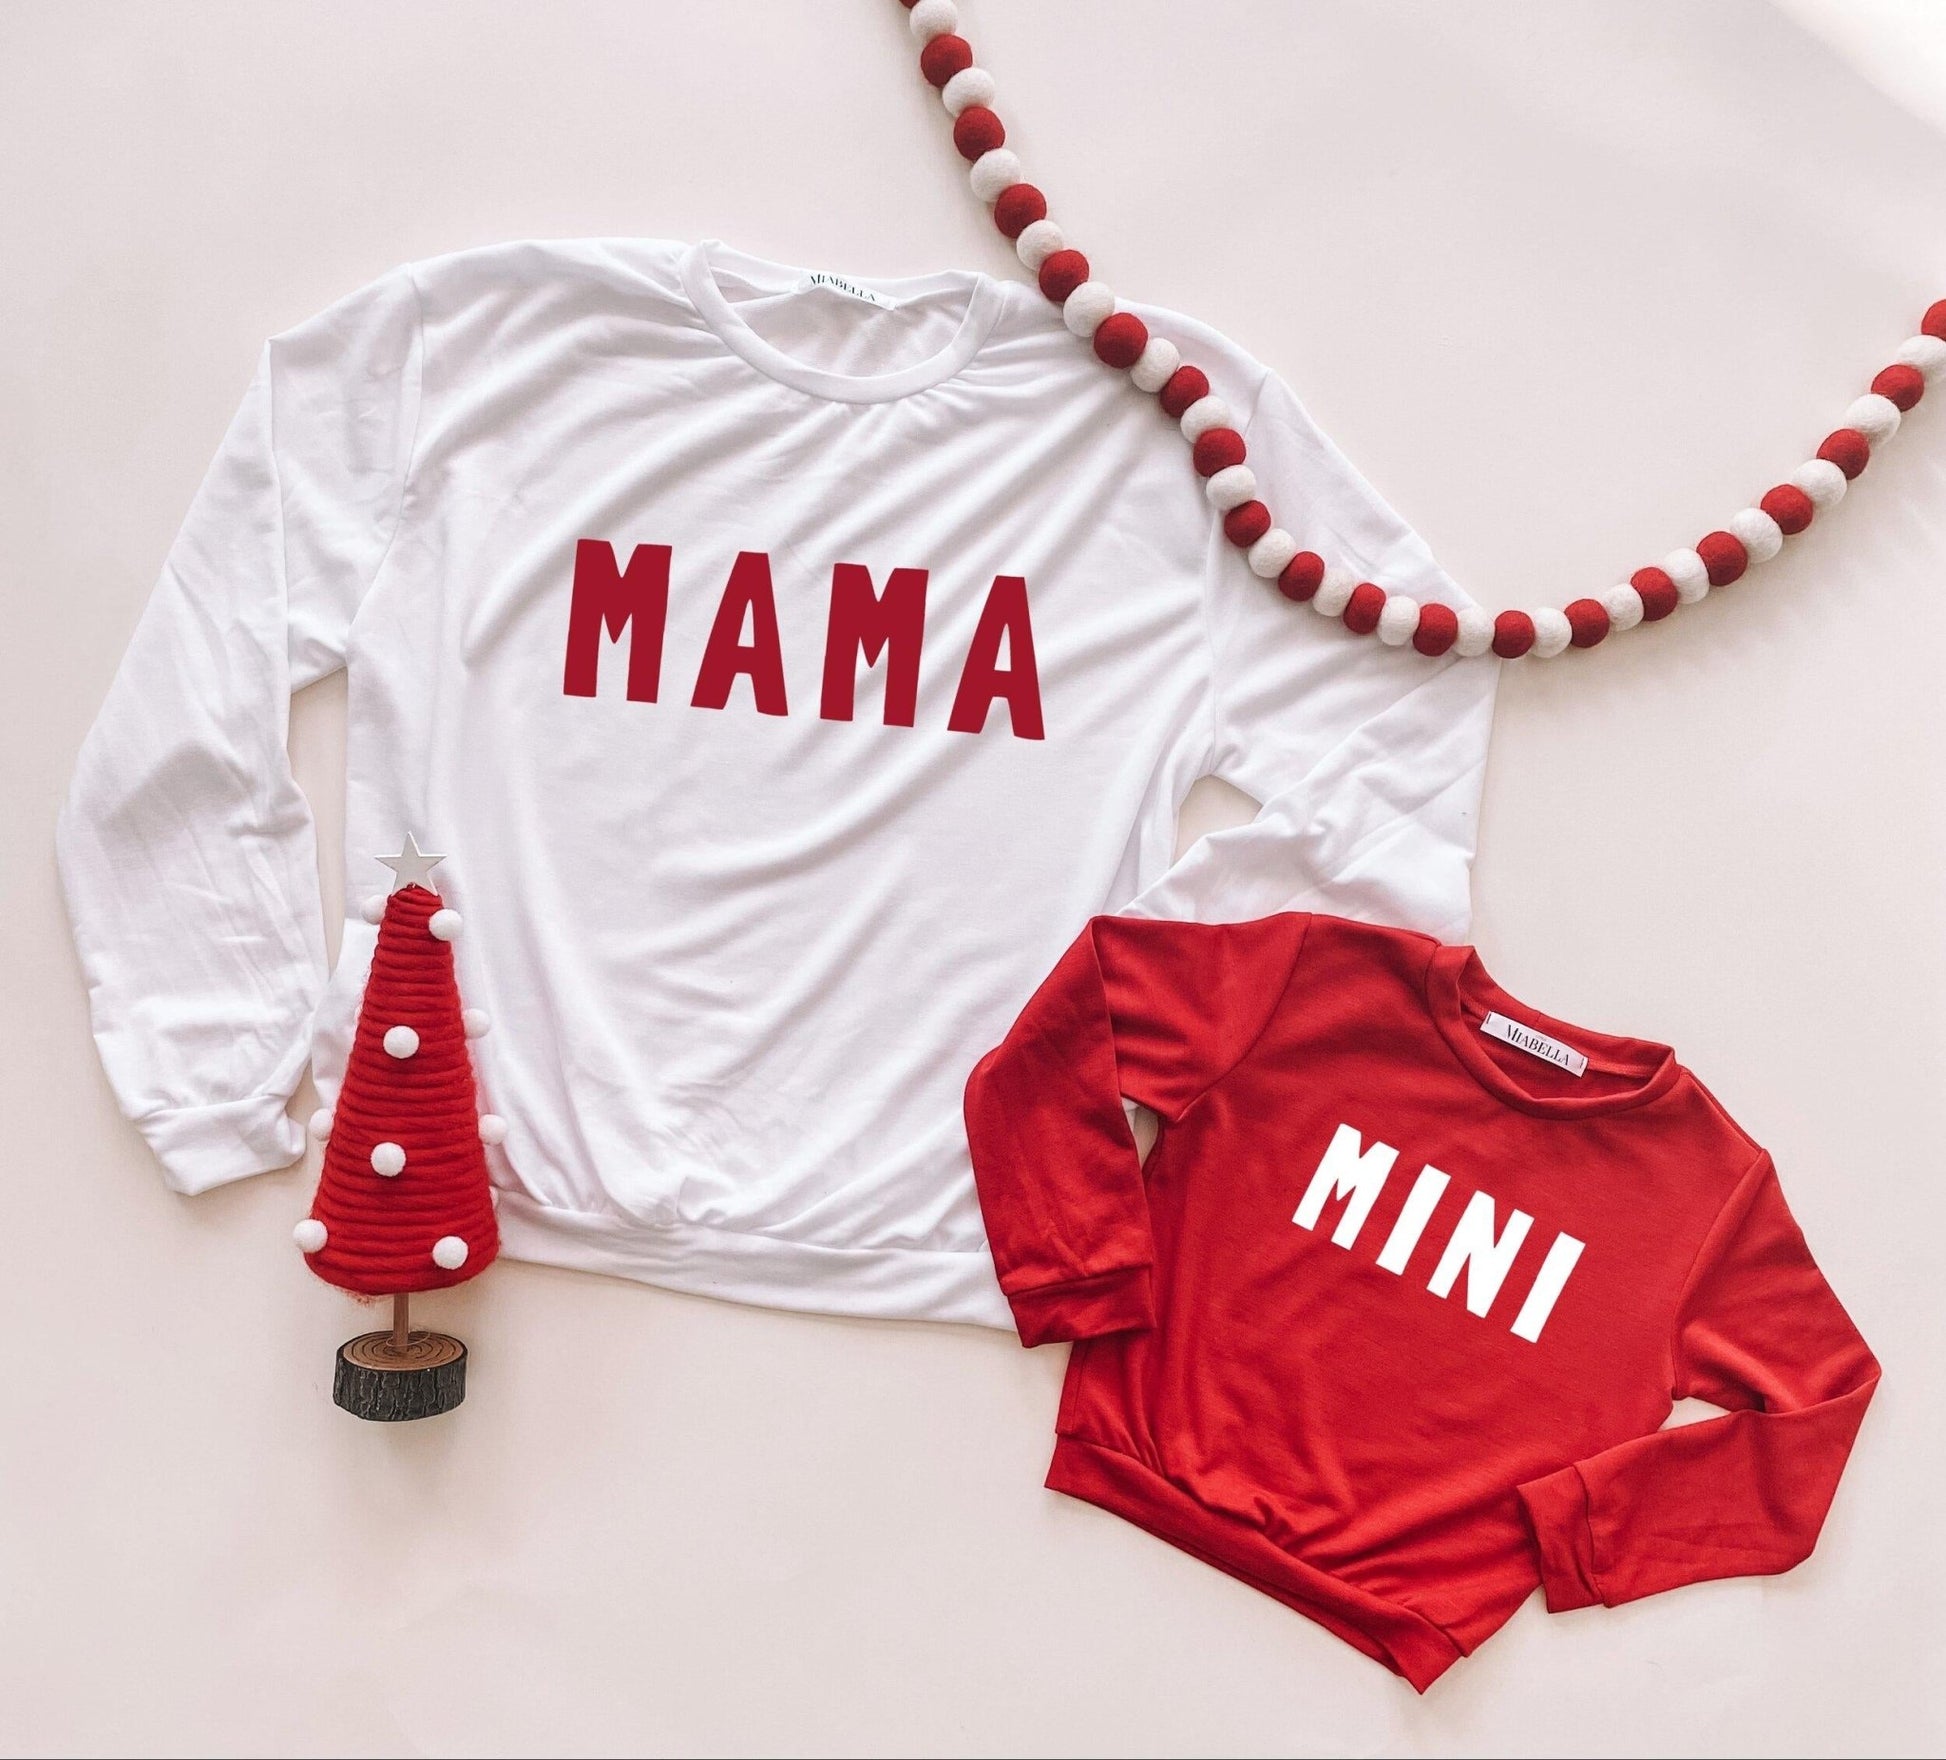 Mama and Mini Red Matching Crewnecks - LITTLE MIA BELLA